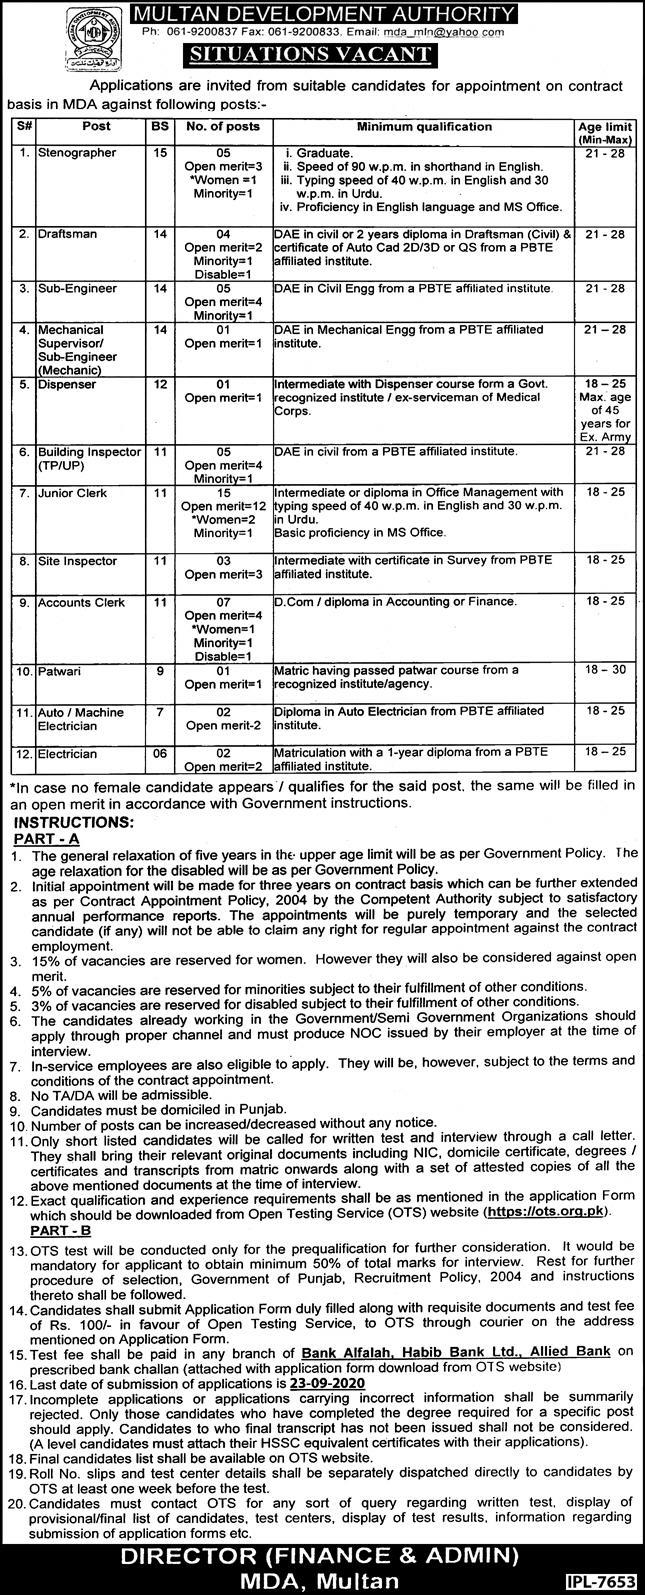 Multan Development Authority Jobs 2020